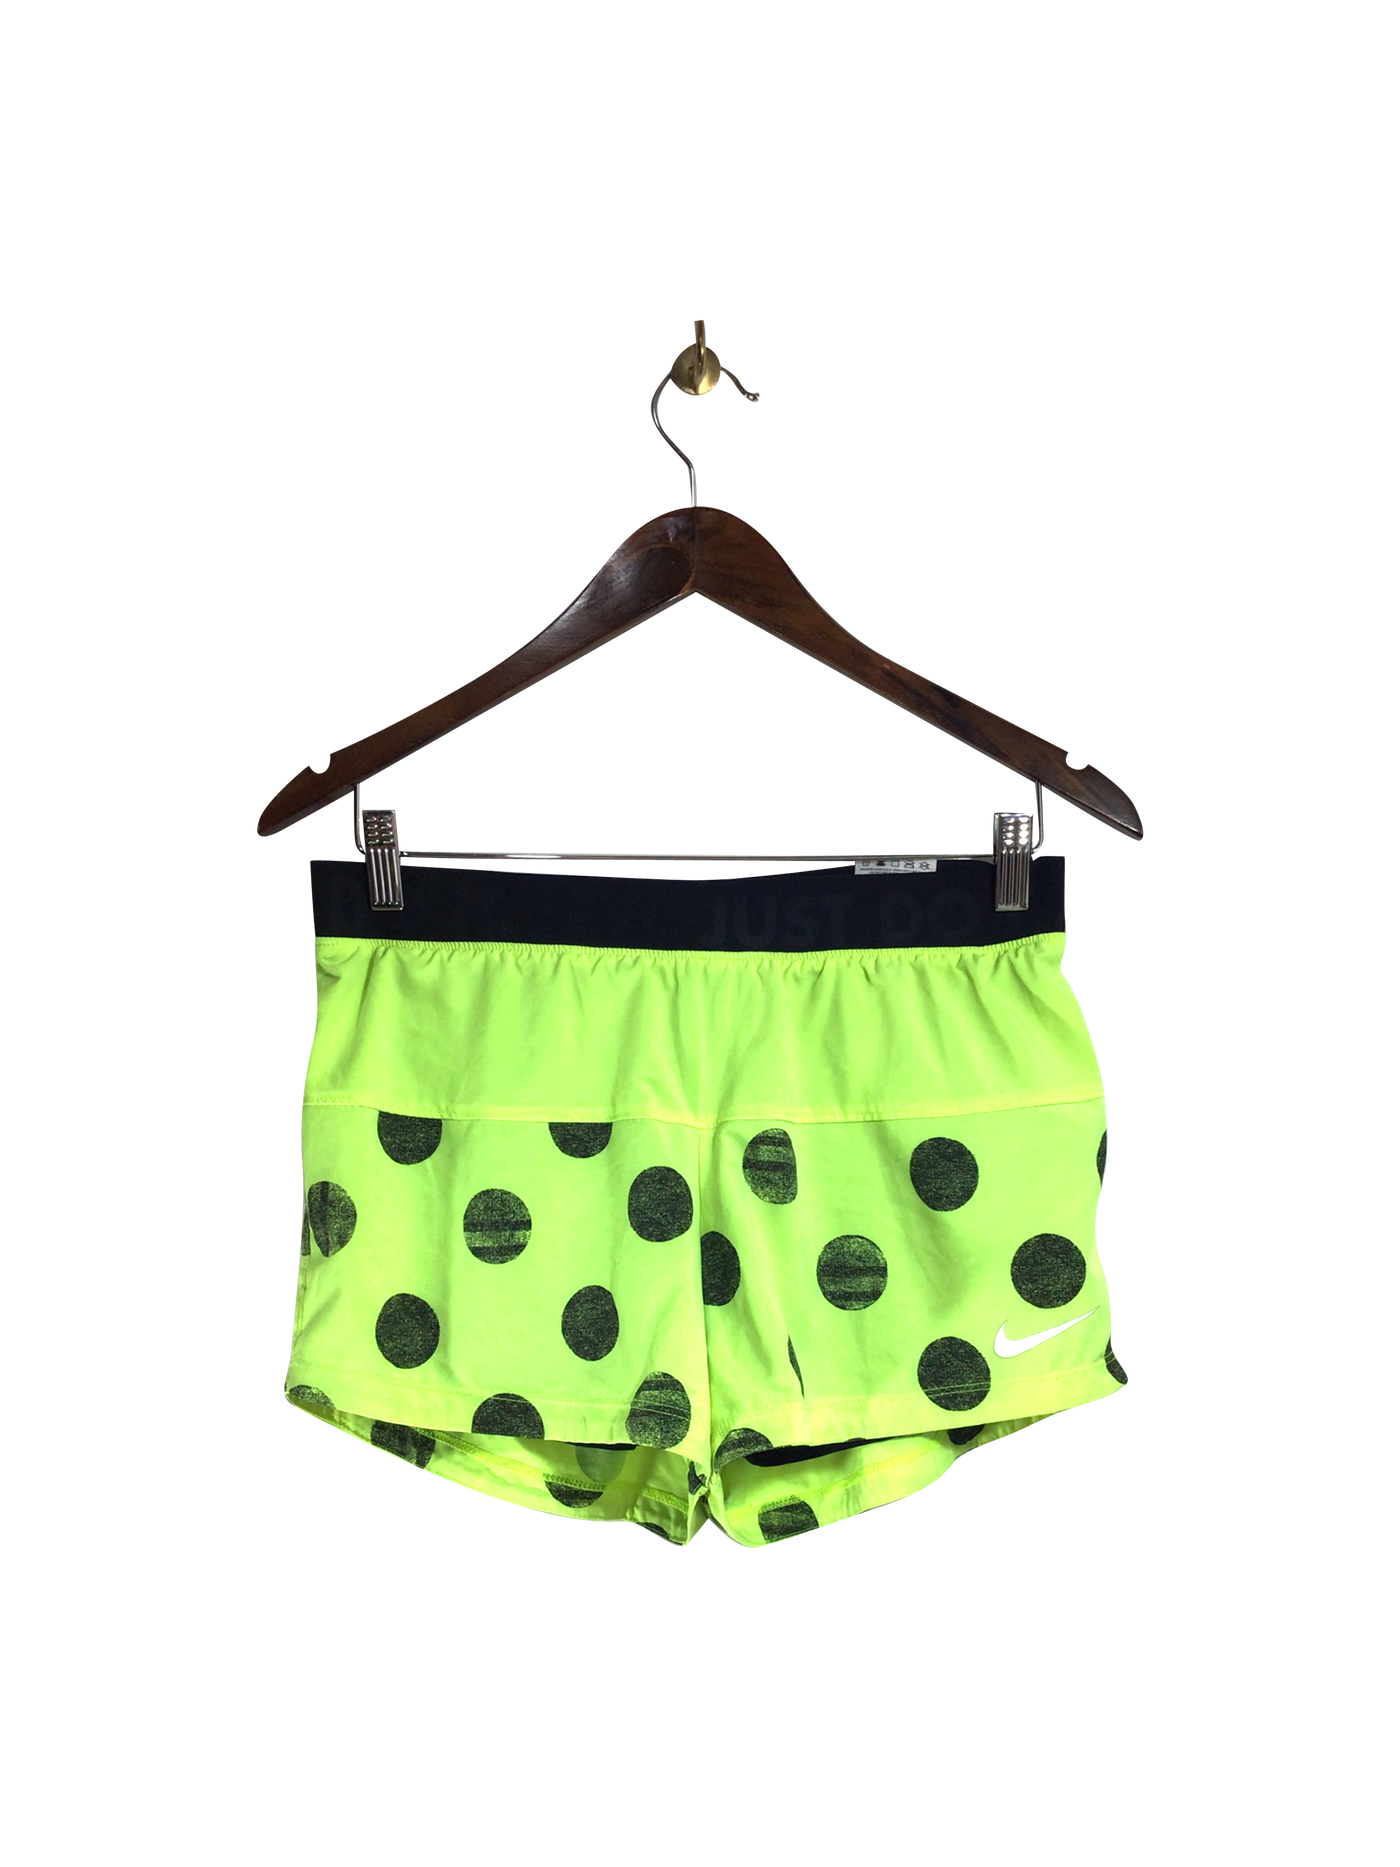 NIKE Women Classic Shorts Regular fit in Green - Size S | 11.99 $ KOOP